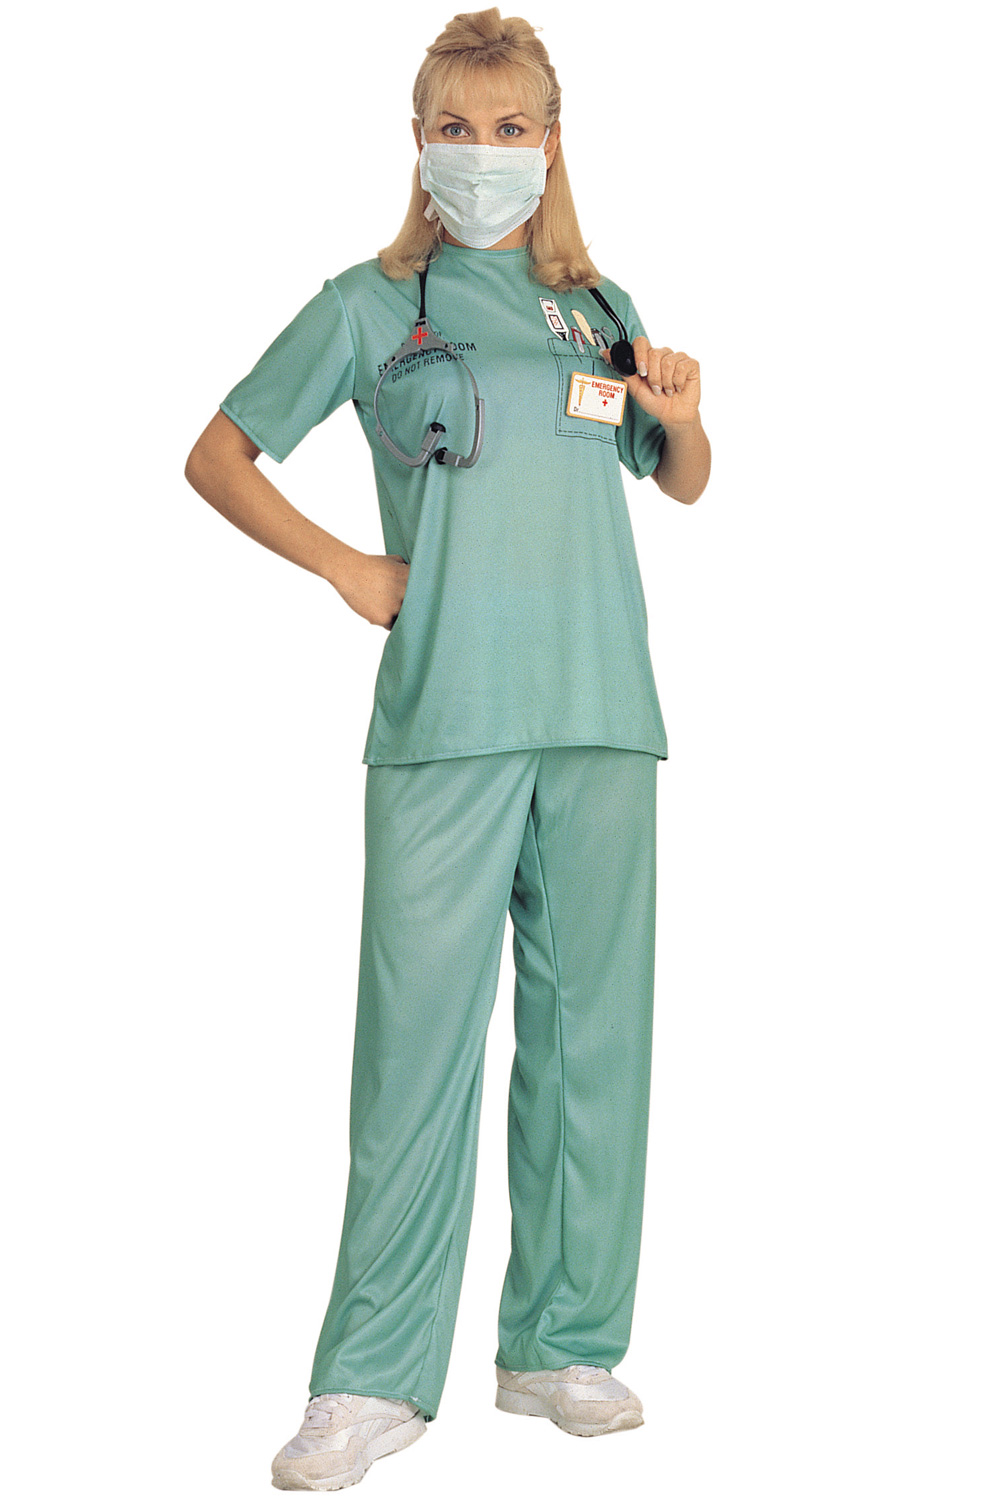 Hospital ER Female Adult Costume.